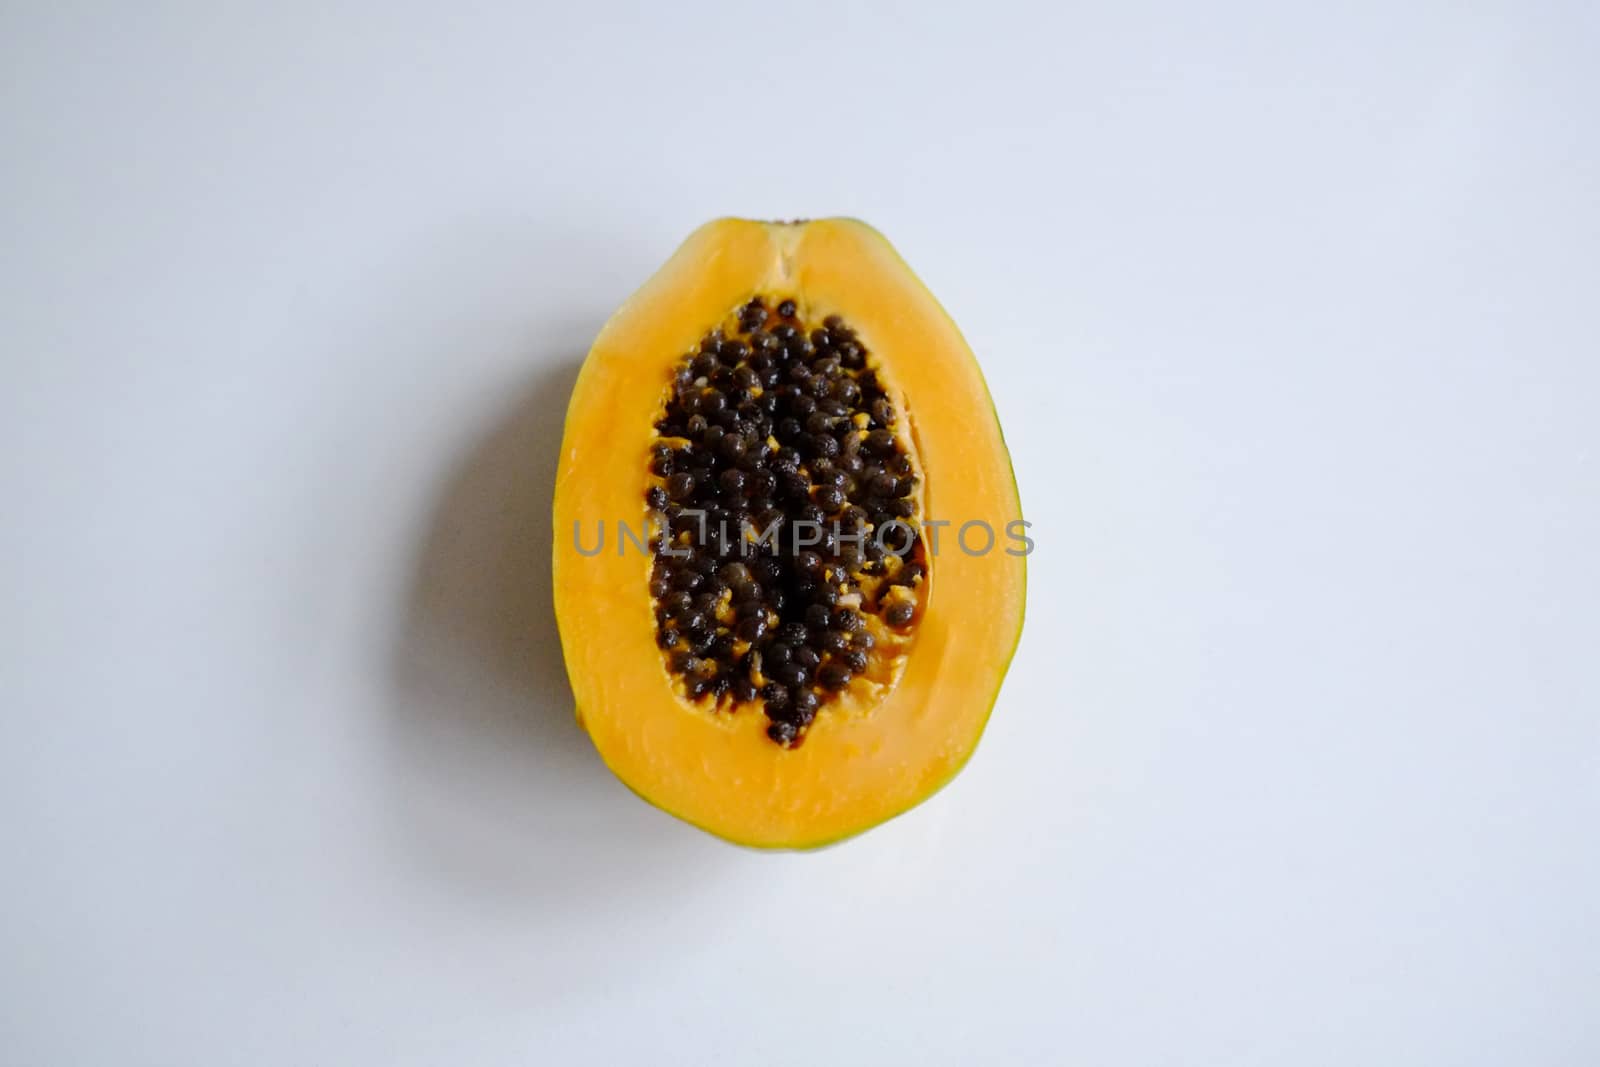 Large papaya cut in half